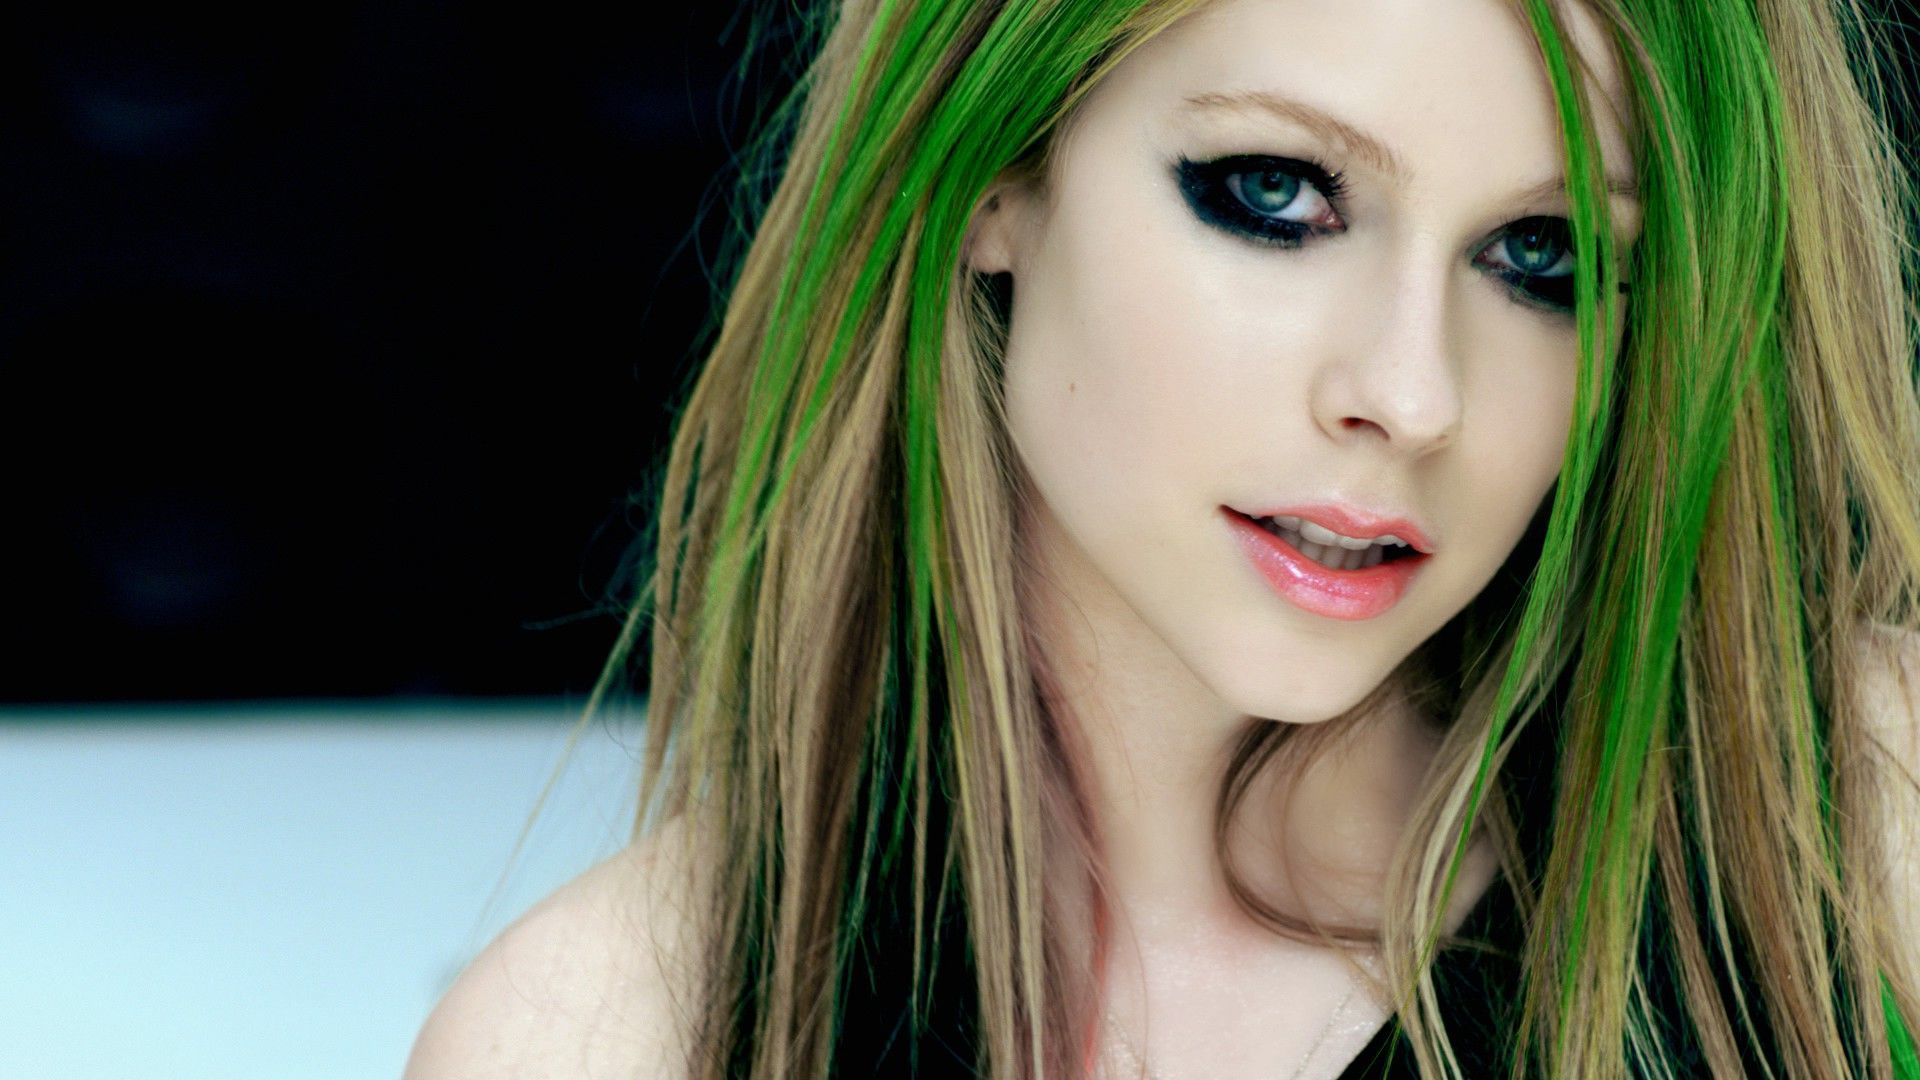 Free download Avril Lavigne wallpaper 16496 [1920x1080]